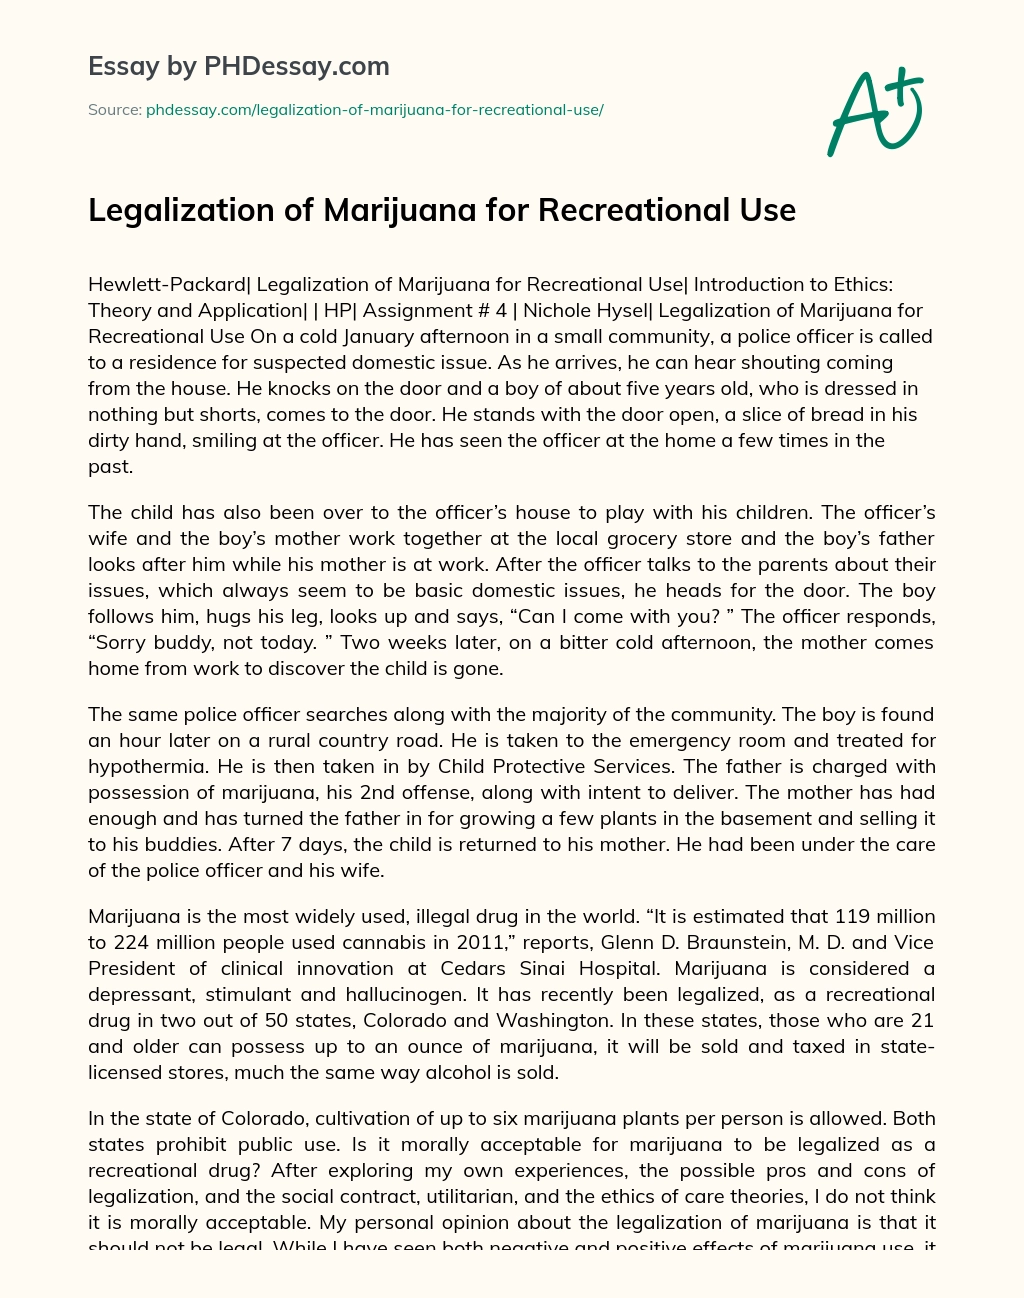 Legalization of Marijuana for Recreational Use essay